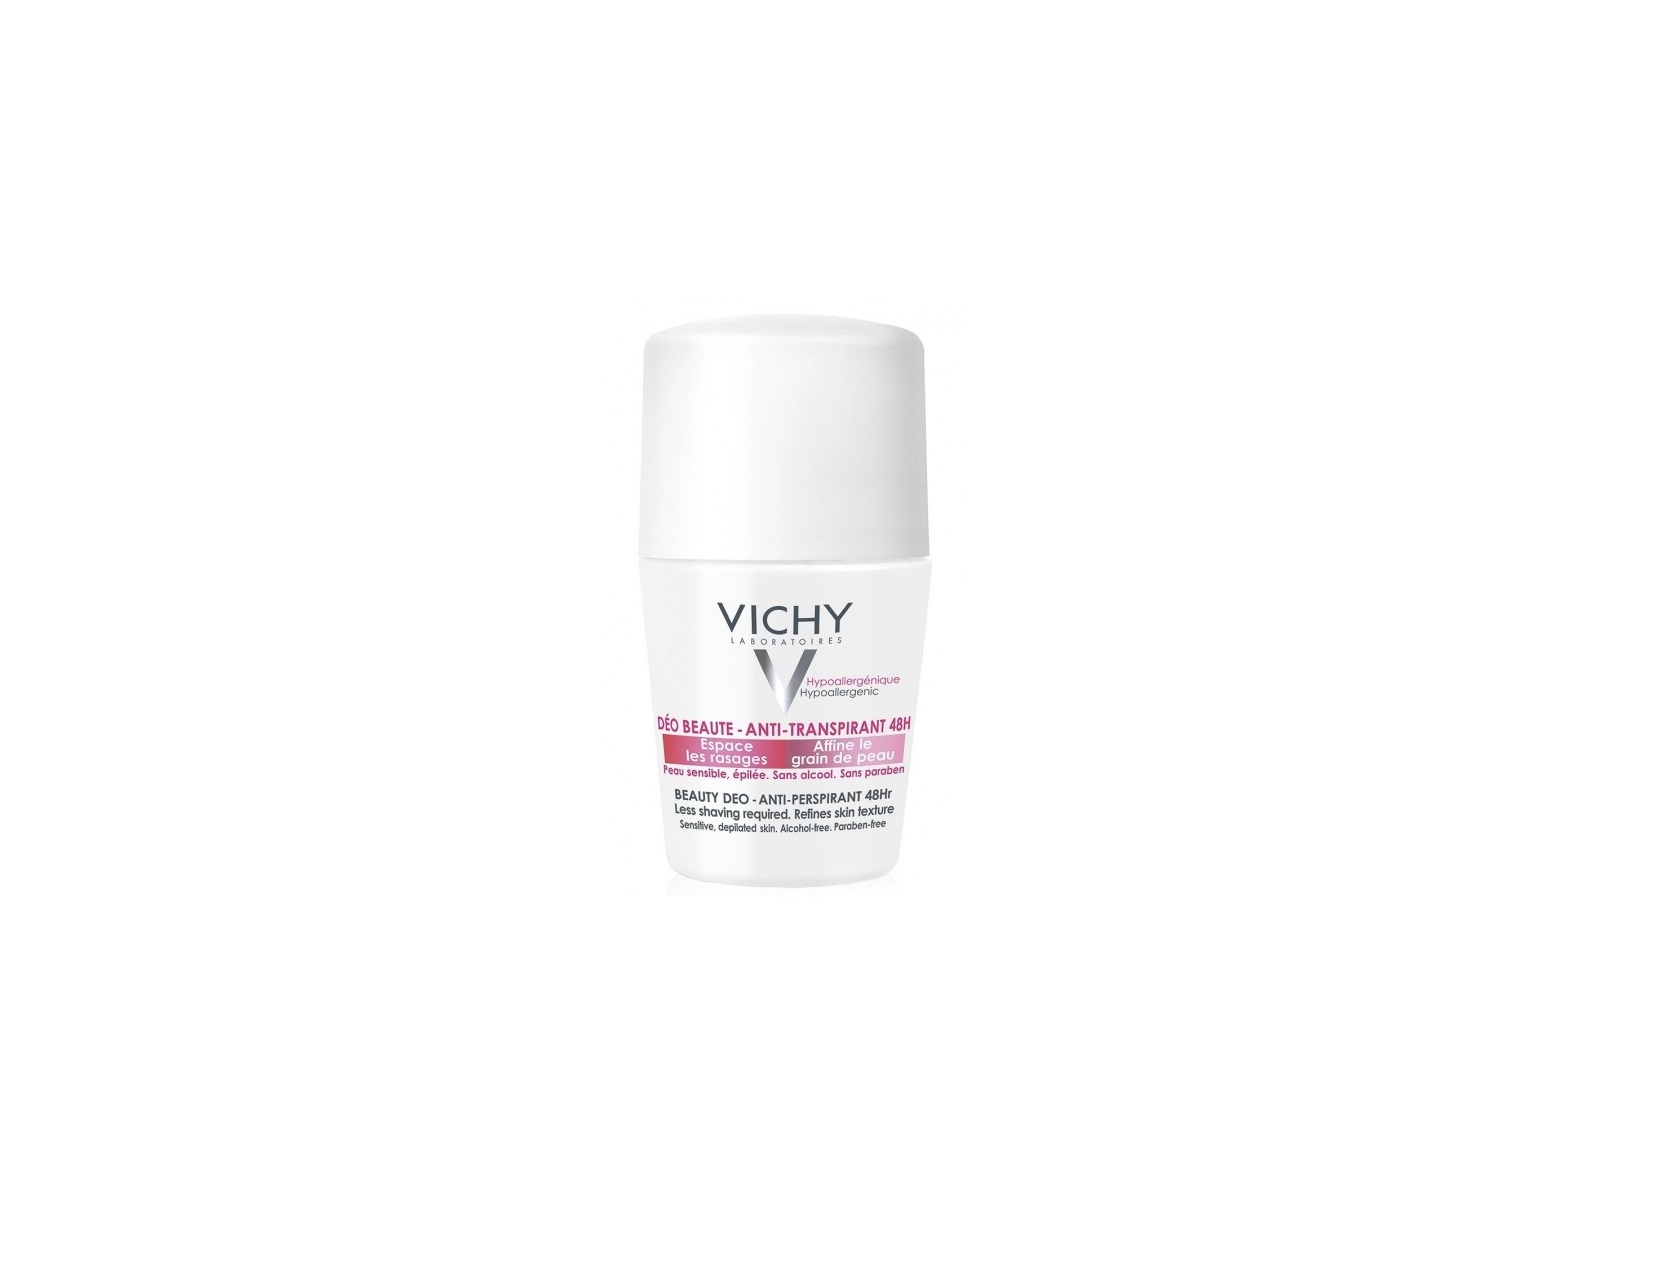 Metode Taiko mave zoom Vichy Deodorant Anti Transpirant 48h | Skin Care | Ponnery